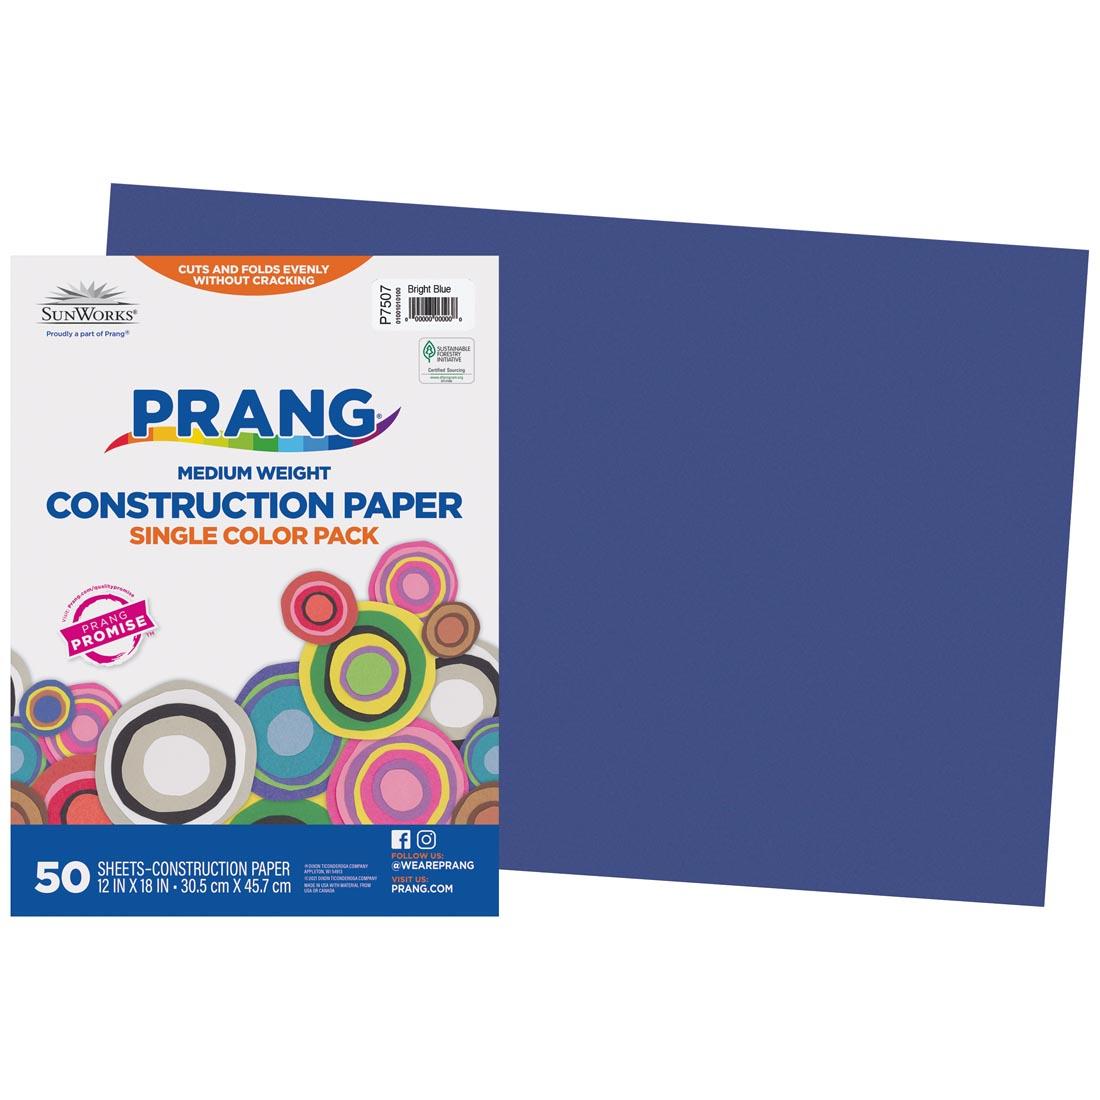 Bright Blue Prang/Sunworks Construction Paper